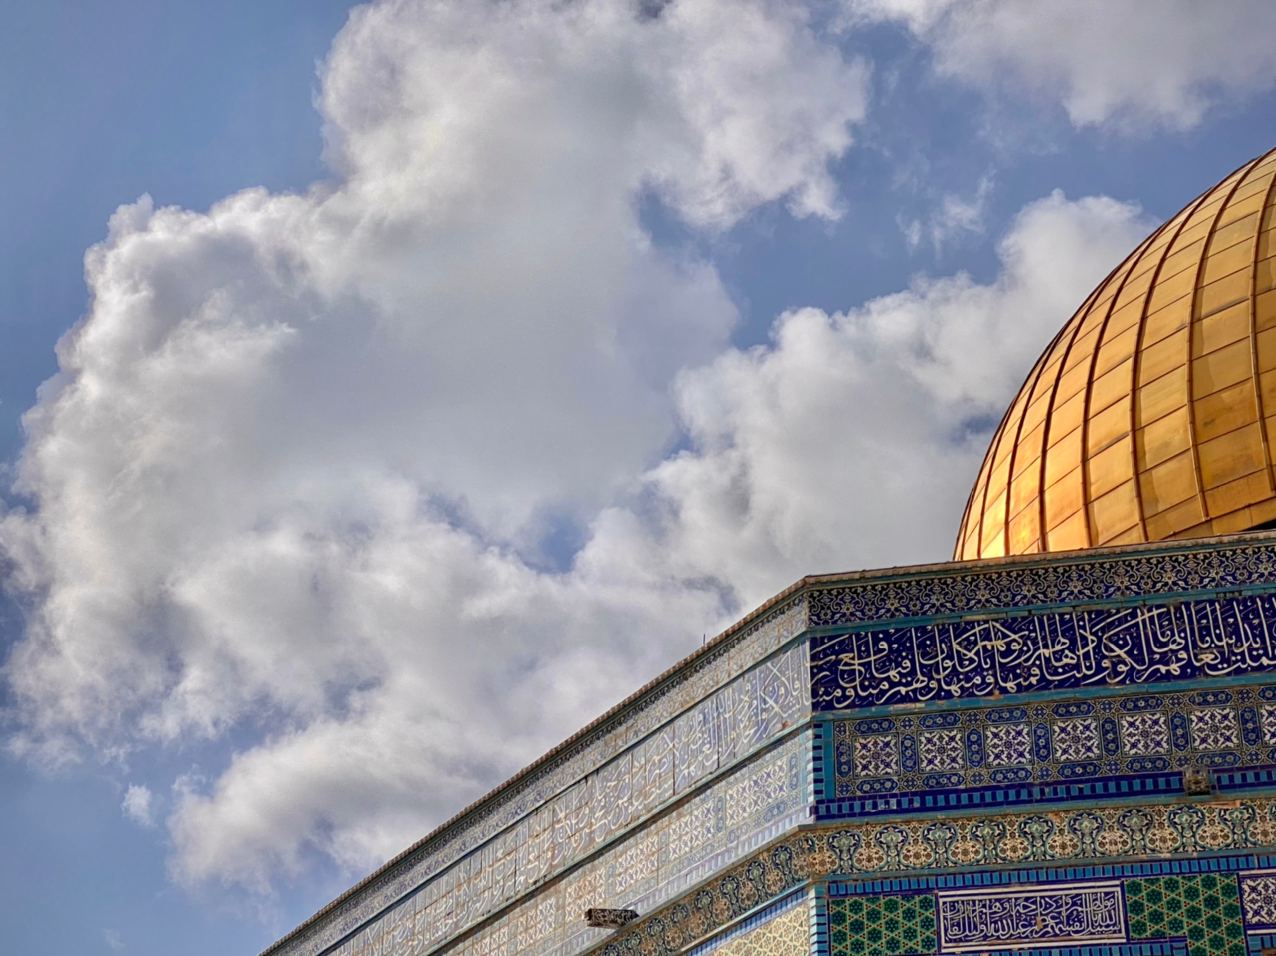 Al-Aqsa Mosque in pictures